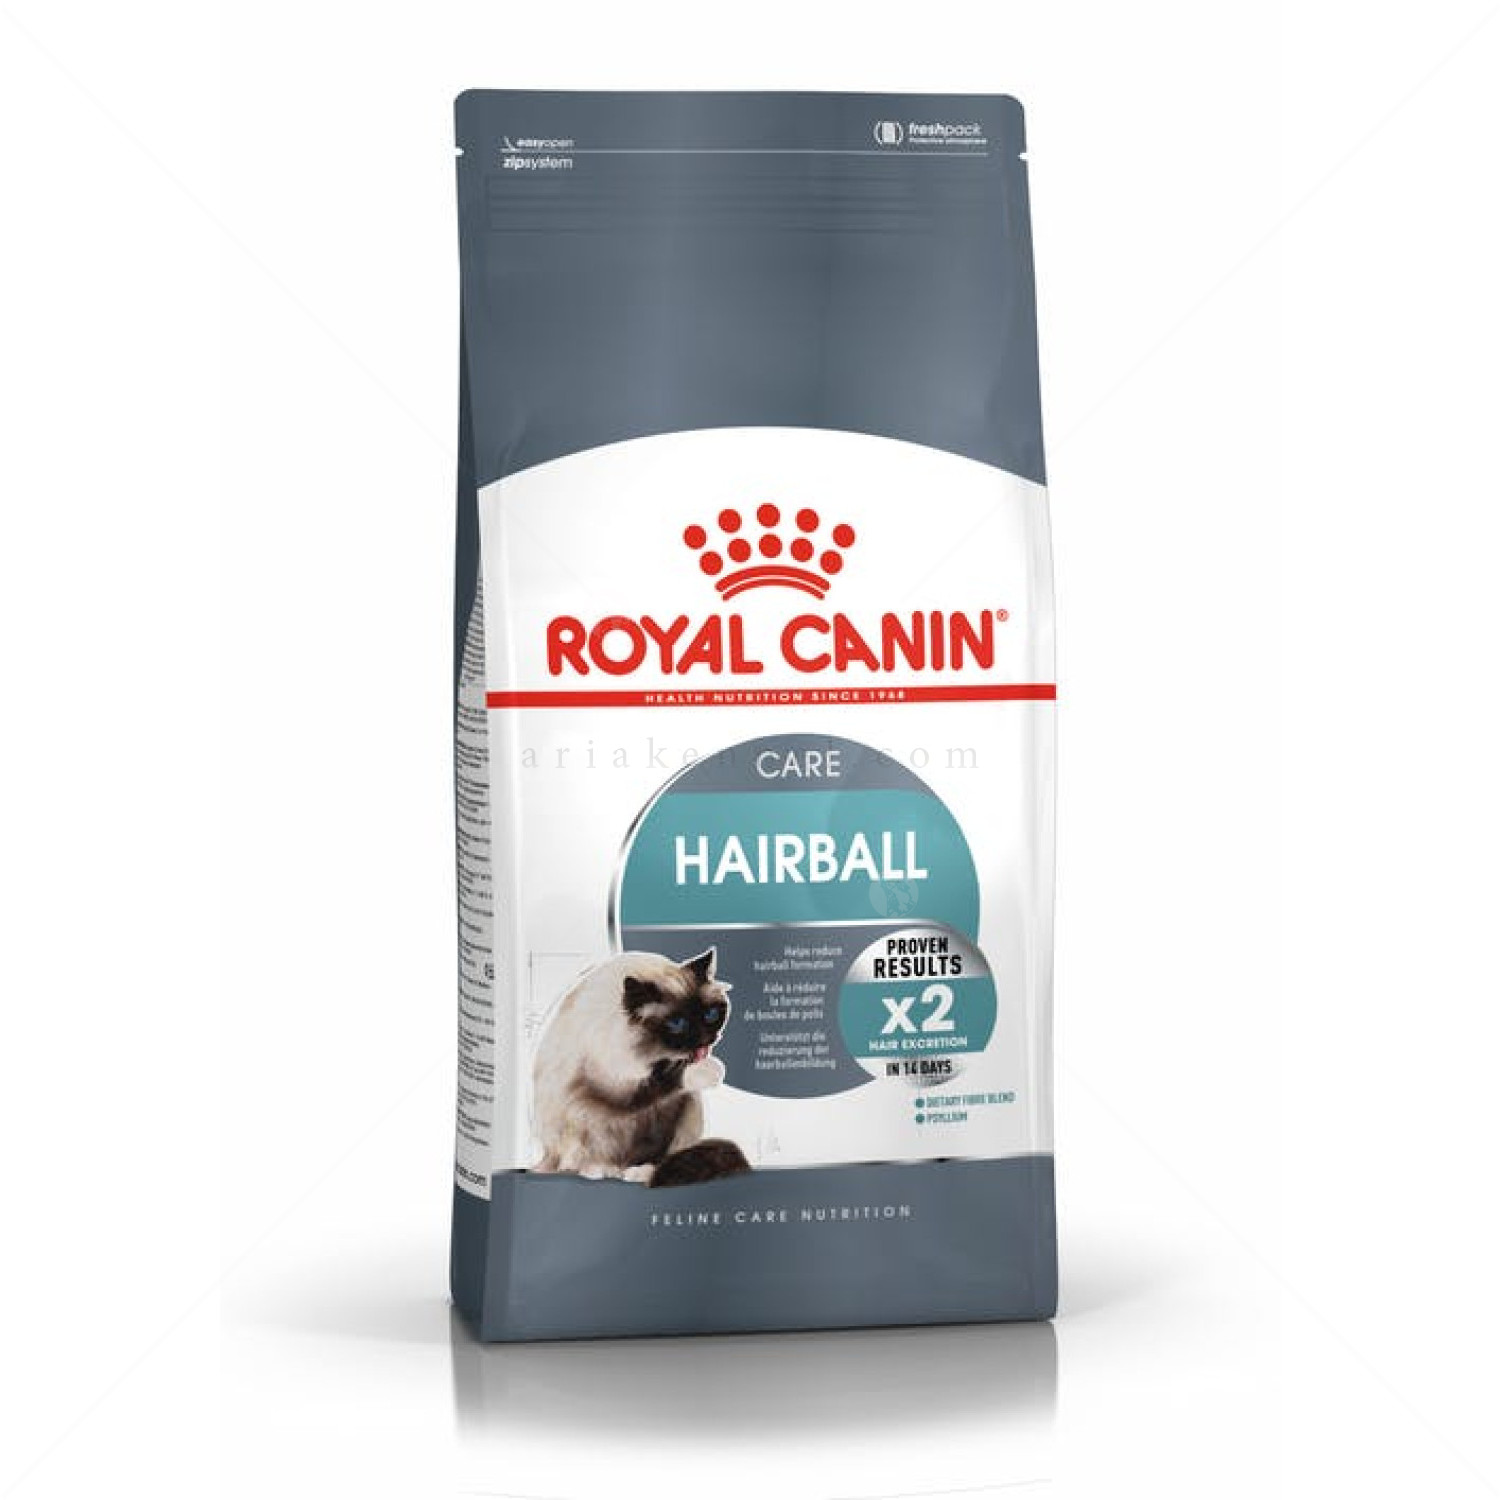 ROYAL CANIN 0.400 кг. Hairball Care